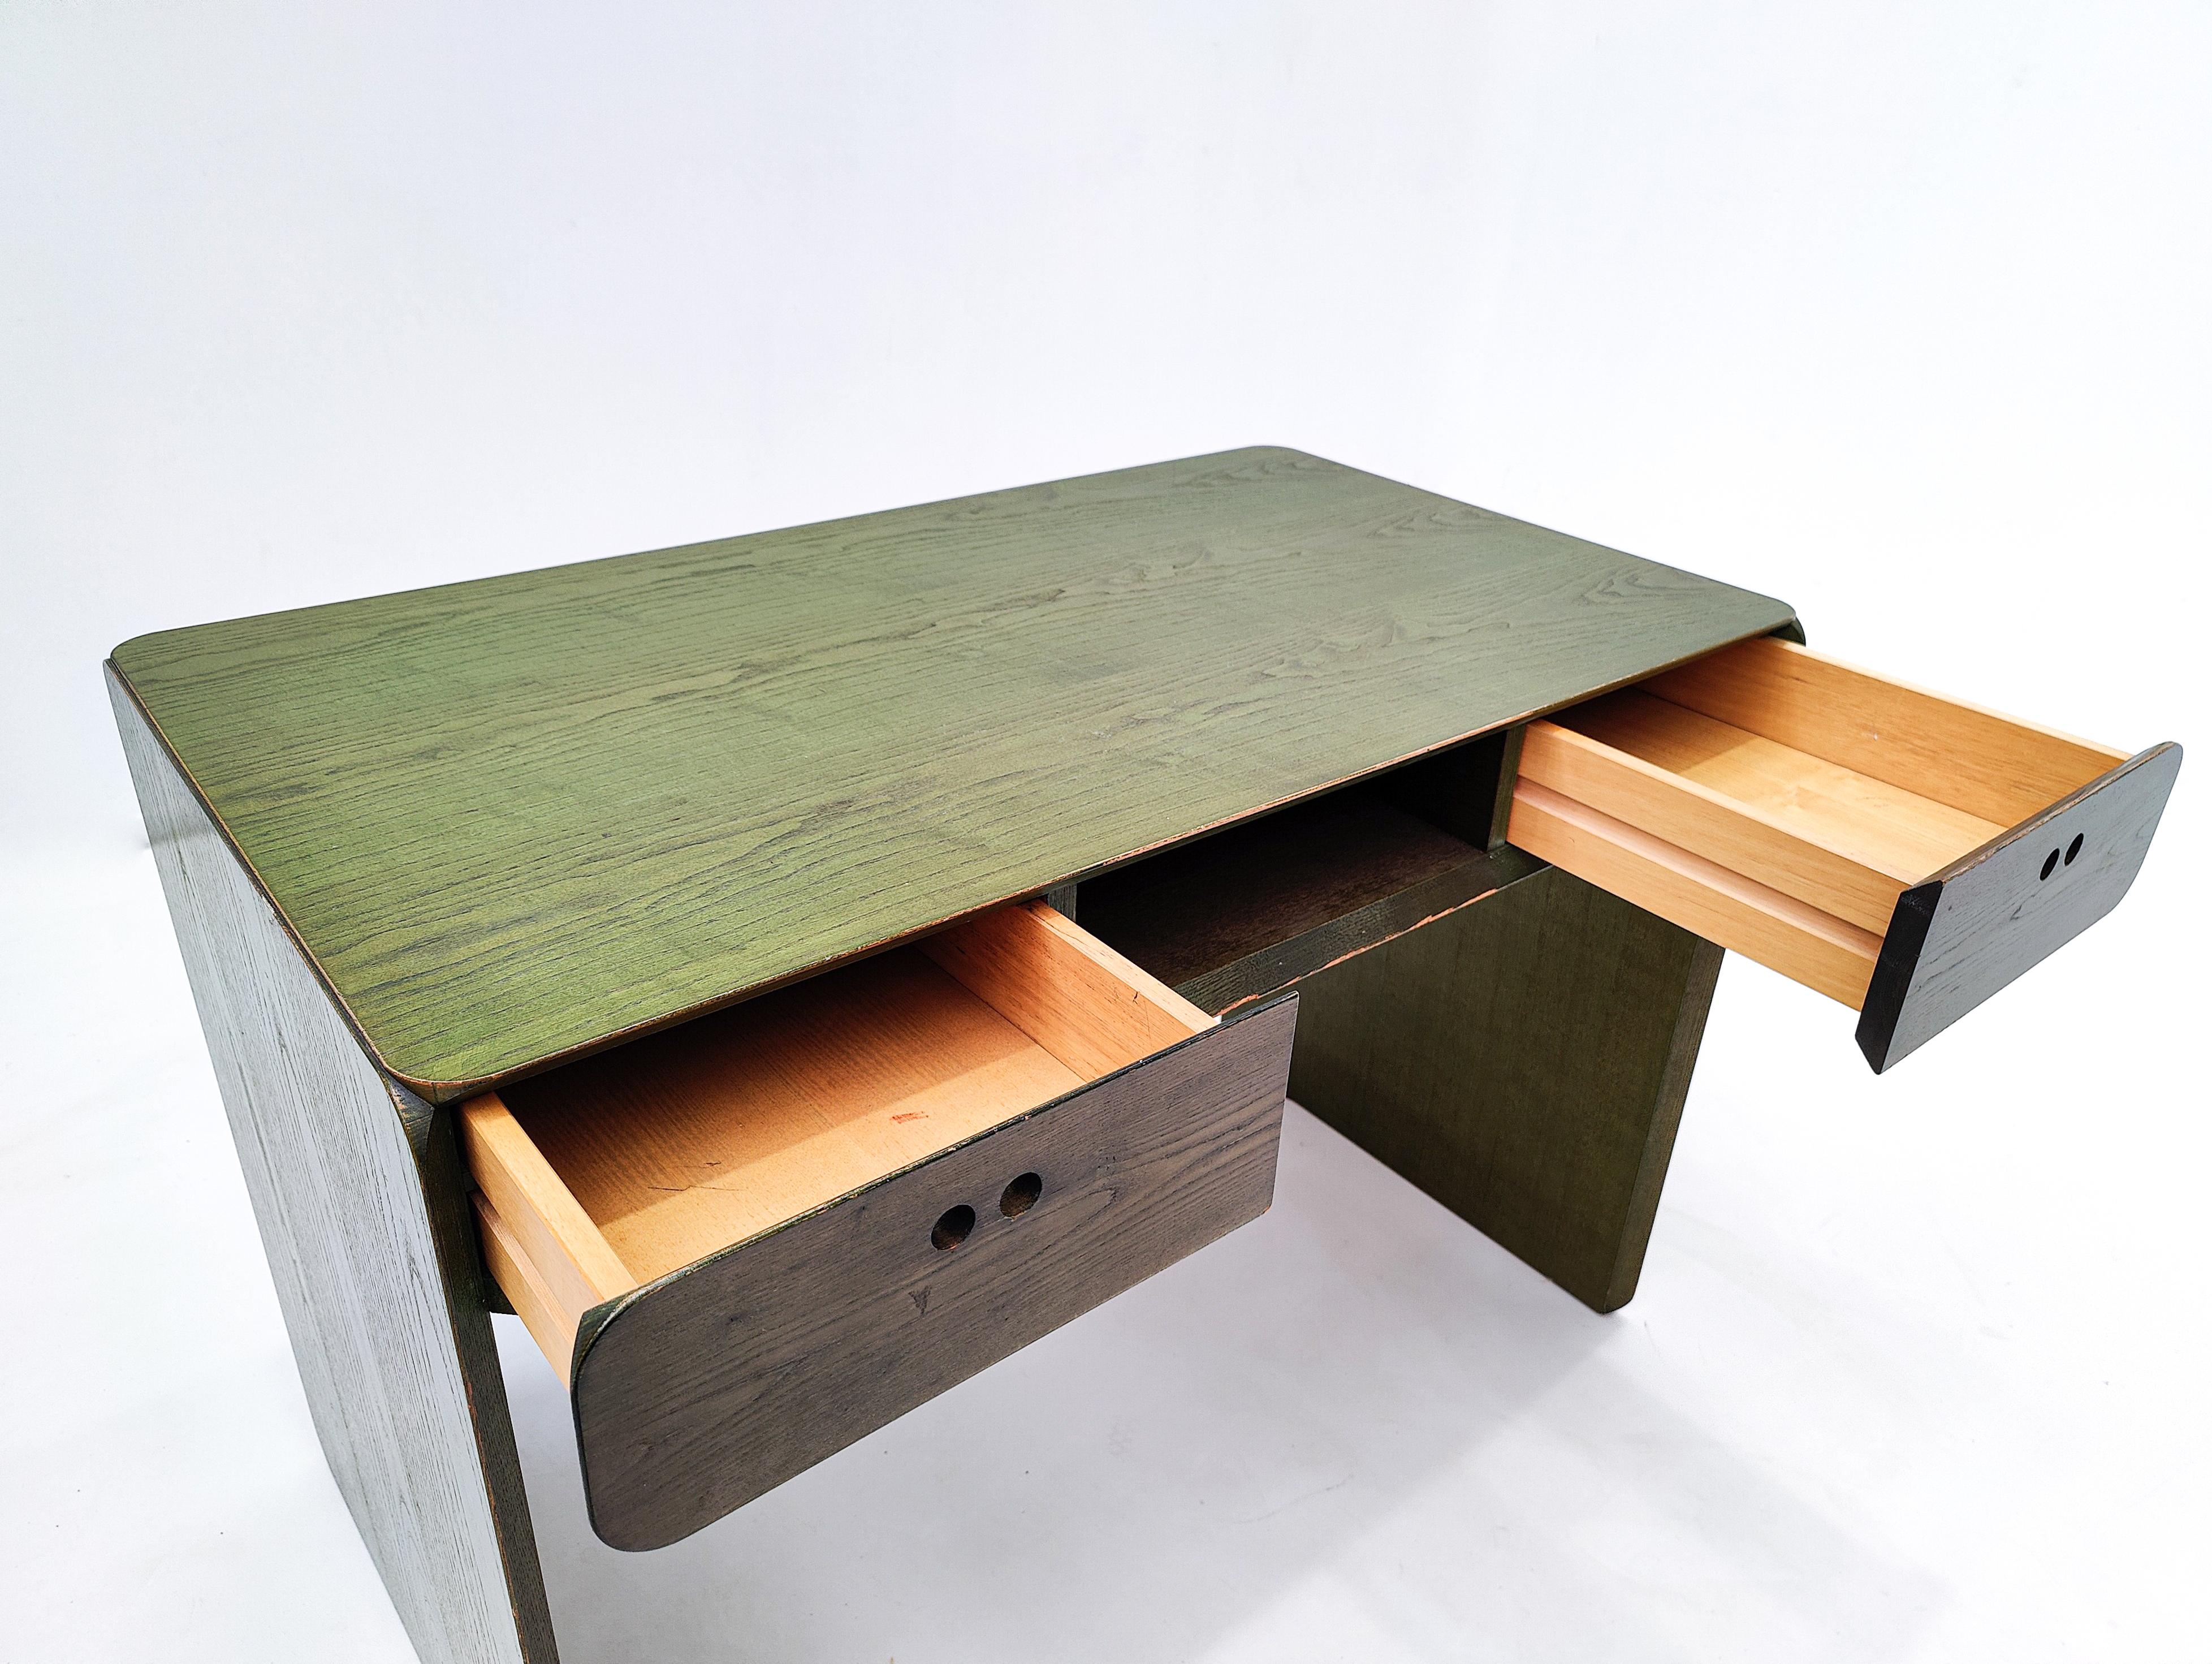 Mid-Century Green Wooden Desk by Derk Jan de Vries - The Netherlands 1960s.